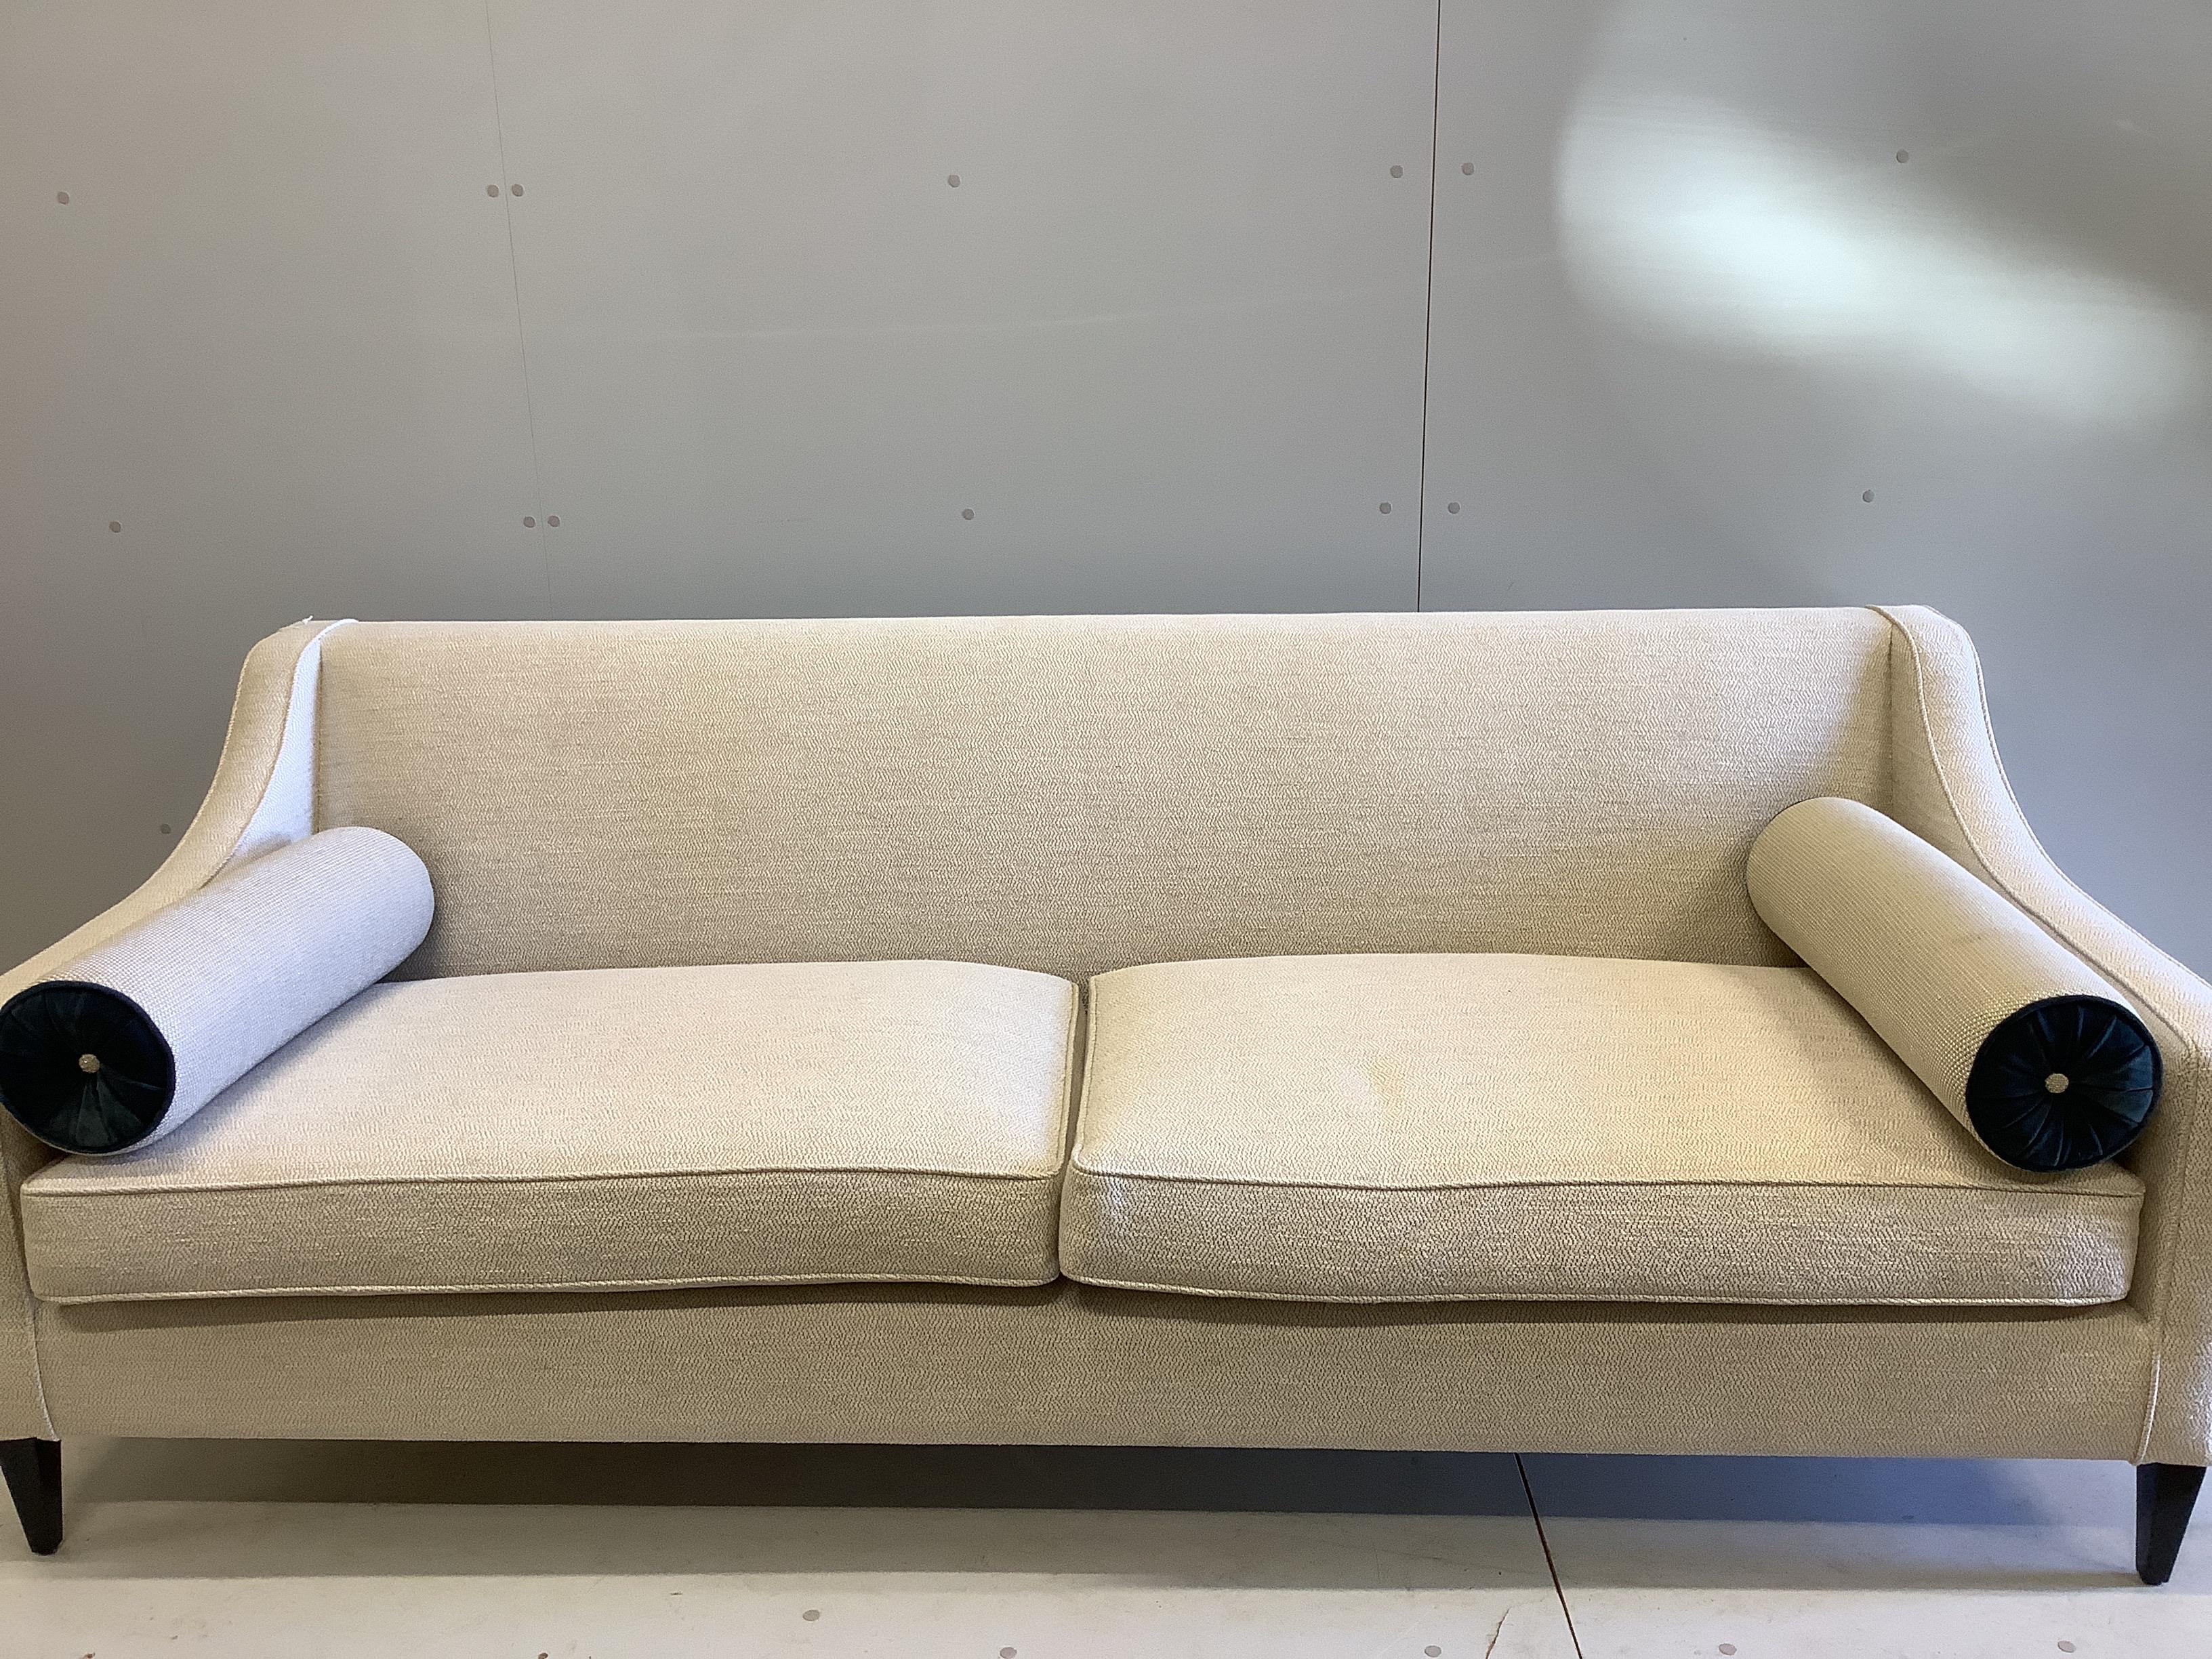 A Sofa & Chair Company Hogarth sofa upholstered in Andrew Martin Harrington Ecru fabric, width 210cm, depth 90cm, height 79cm